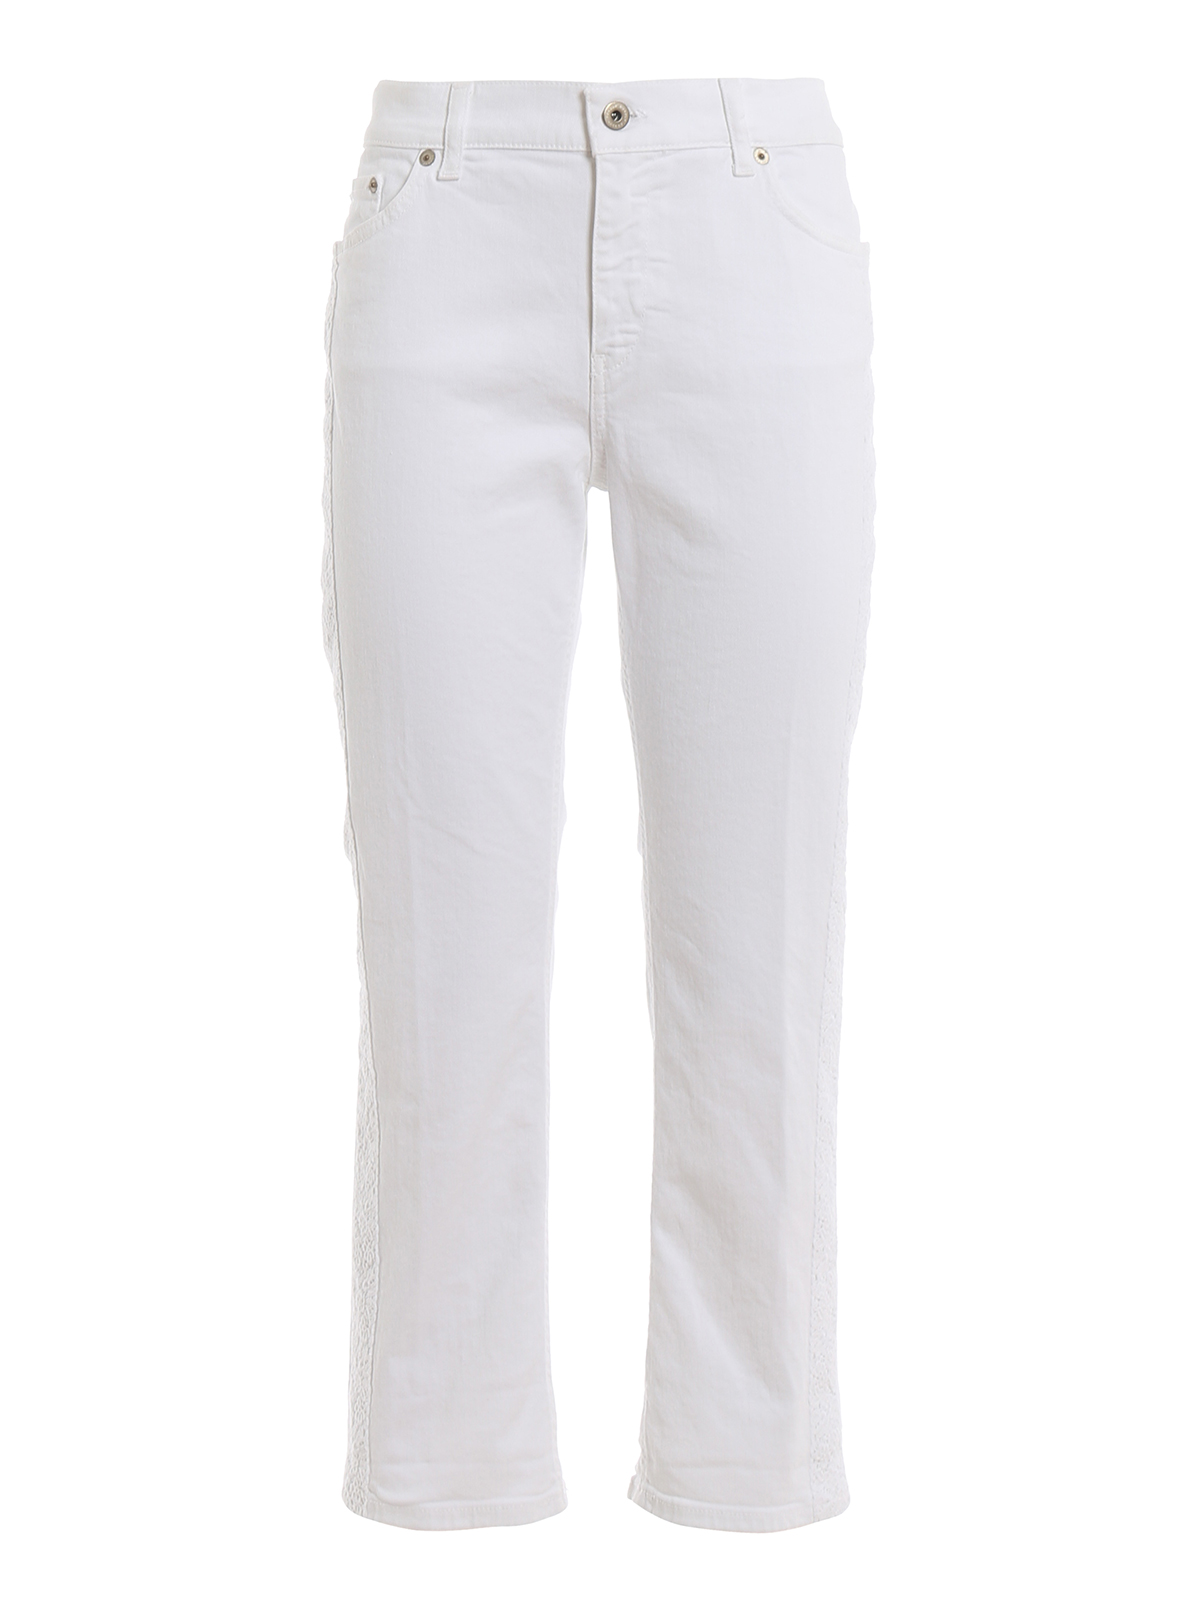 paige white pants